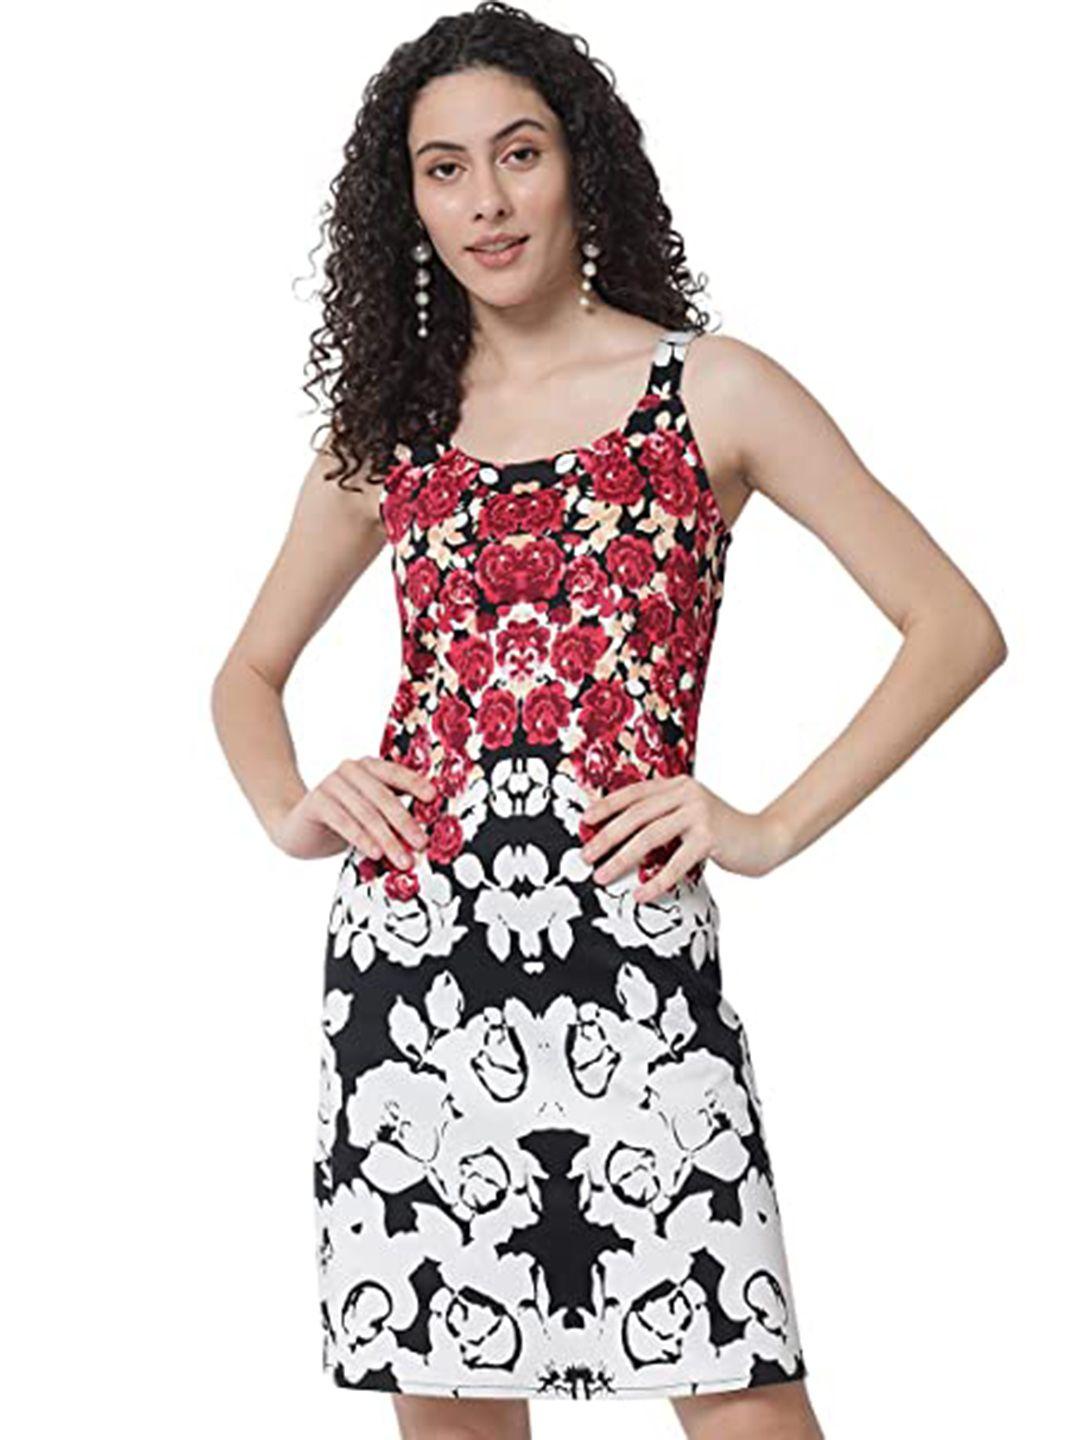 Tulsattva Black & White Floral Printed Cotton Sheath Dress